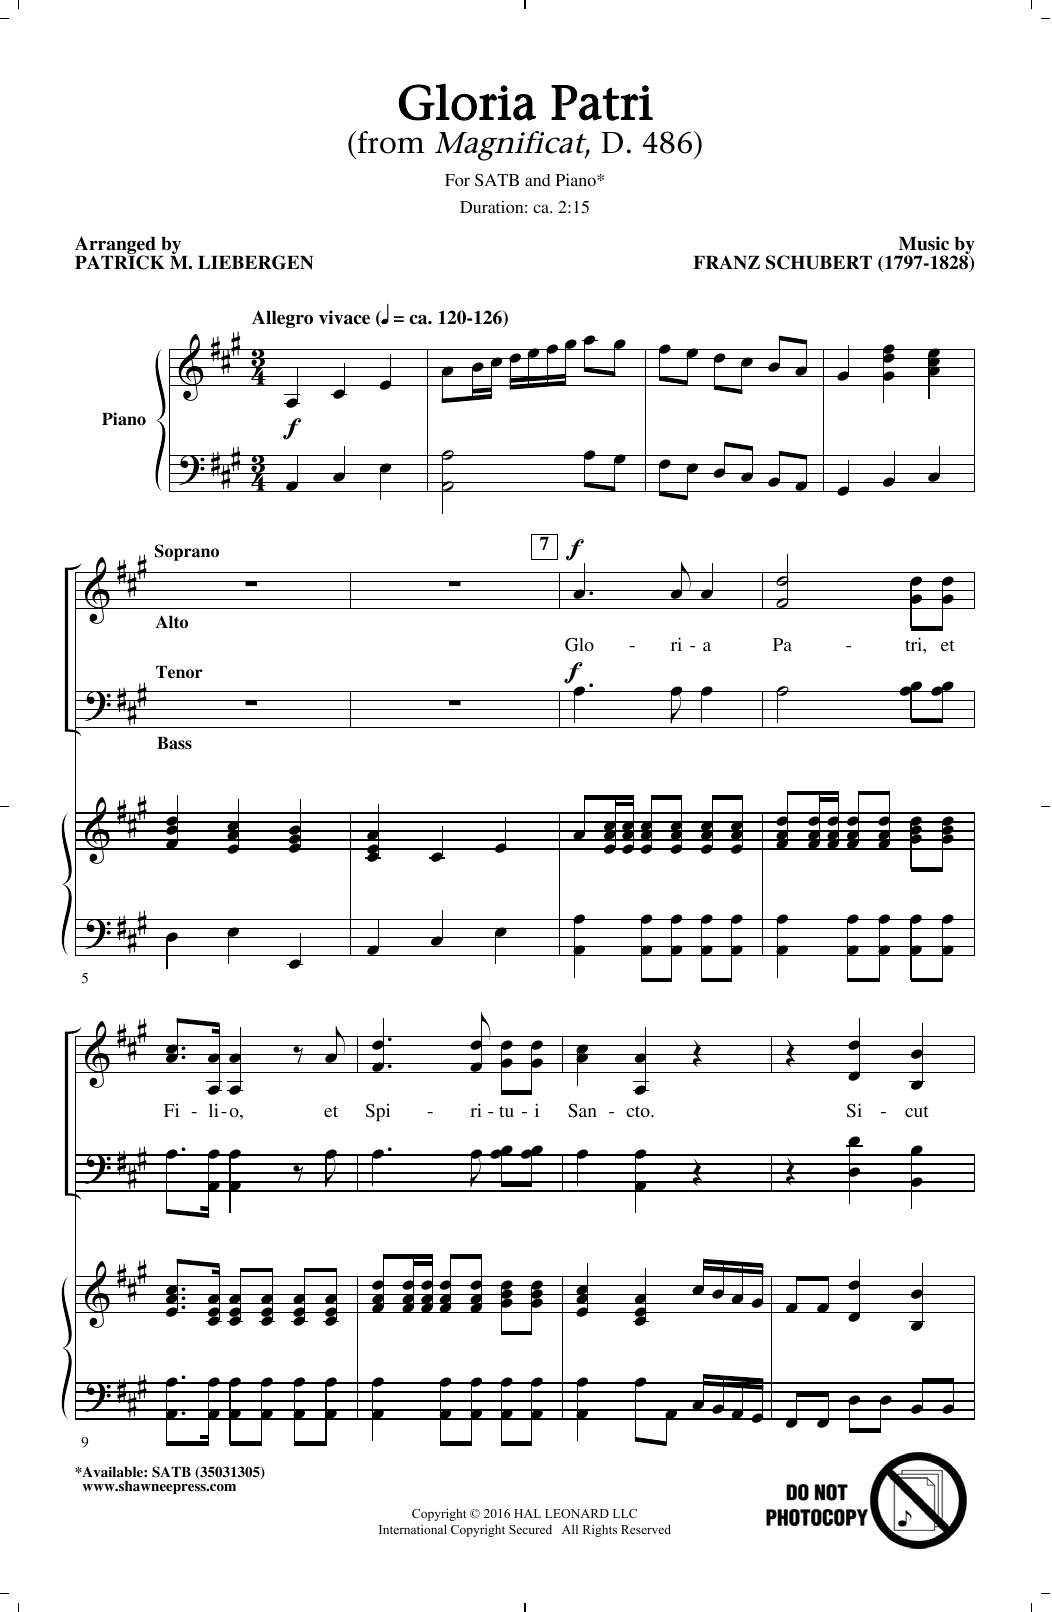 Patrick M. Liebergen Gloria Patri Sheet Music Notes & Chords for SATB - Download or Print PDF